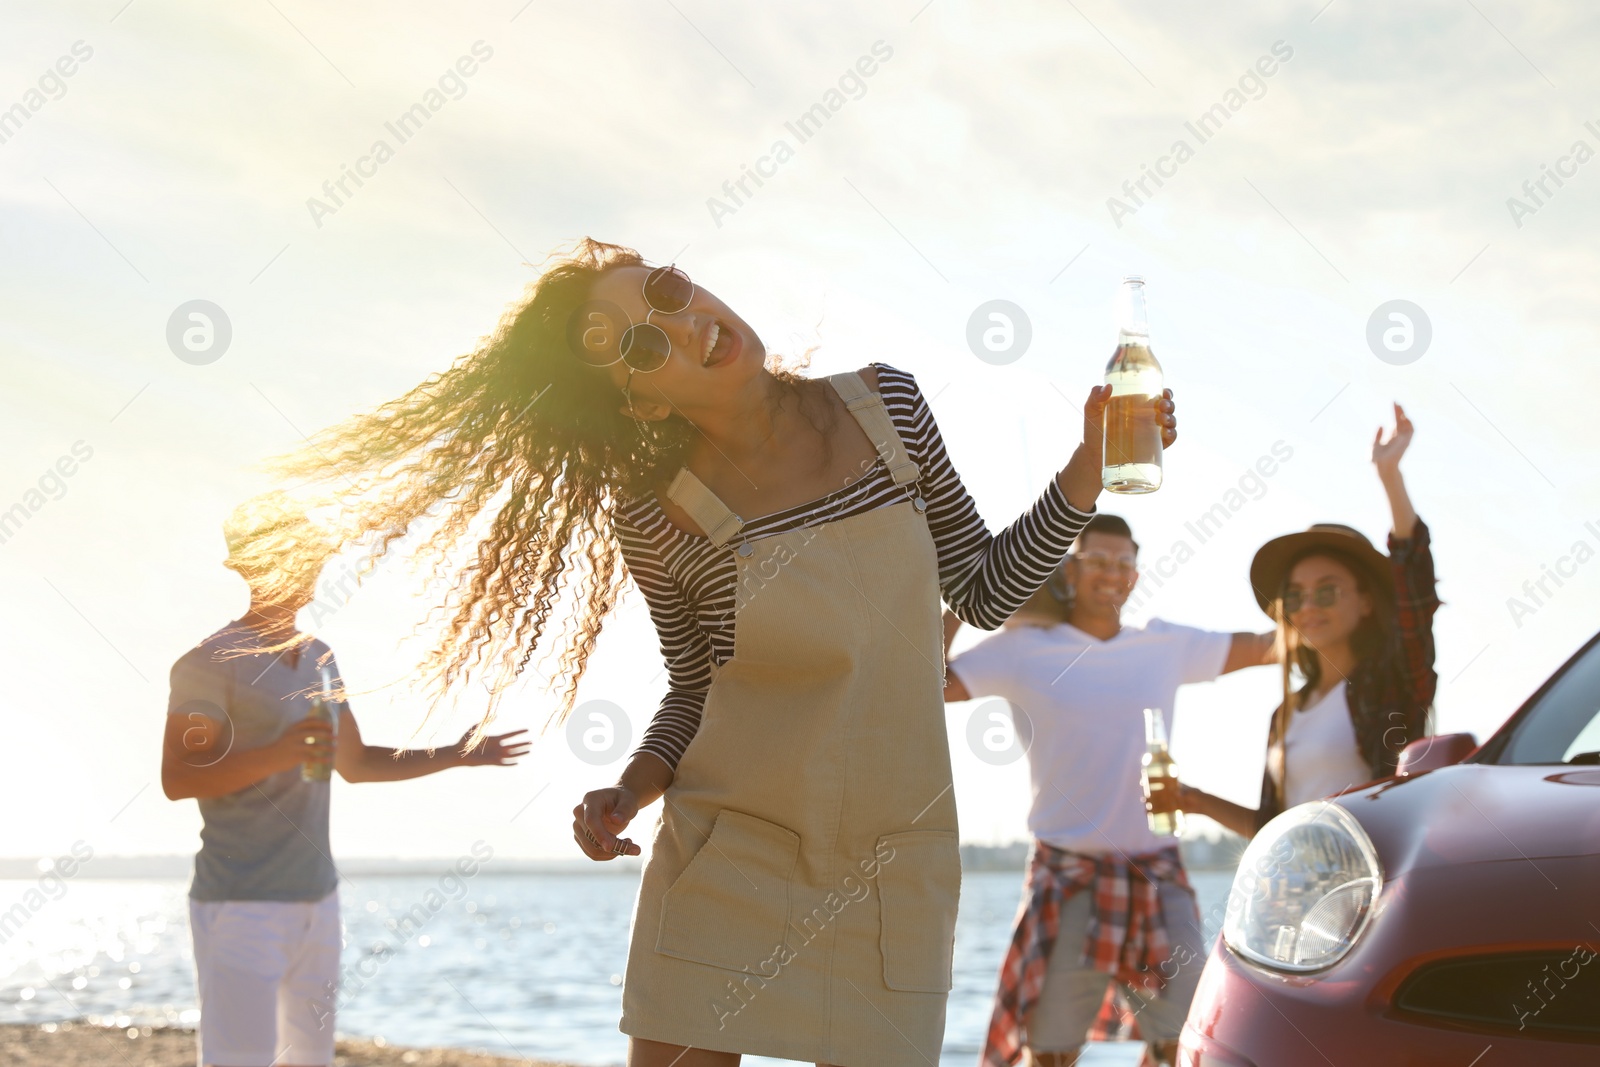 Photo of Happy friends having fun near car on beach. Summer trip